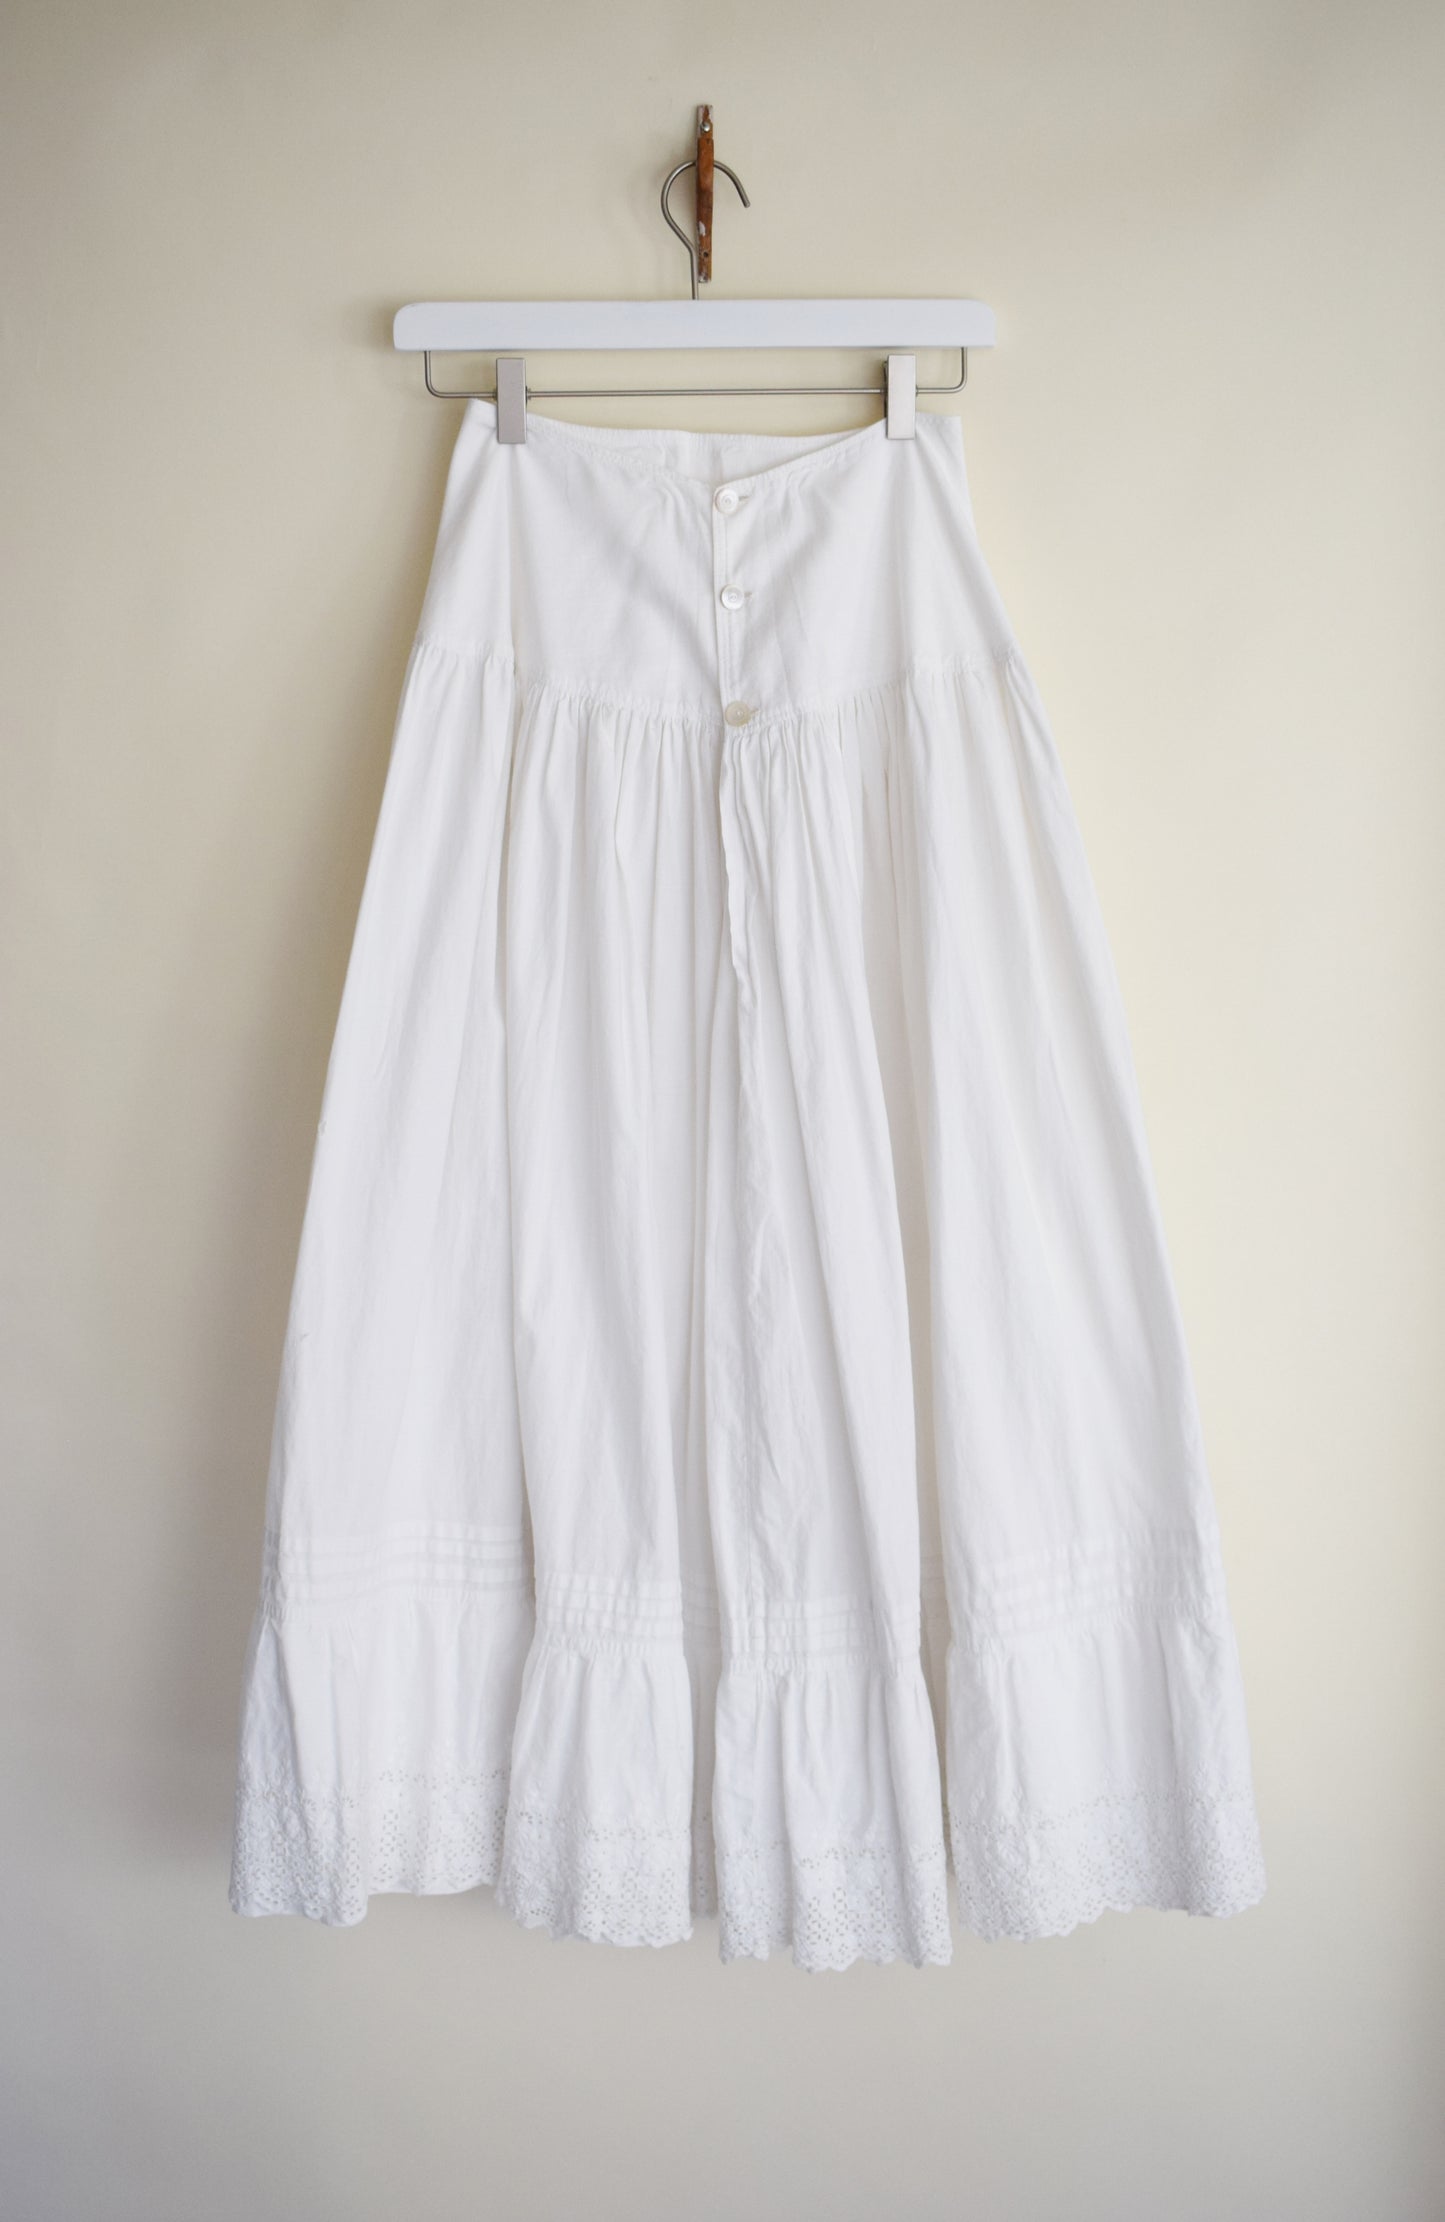 Antique White Cotton Petticoat